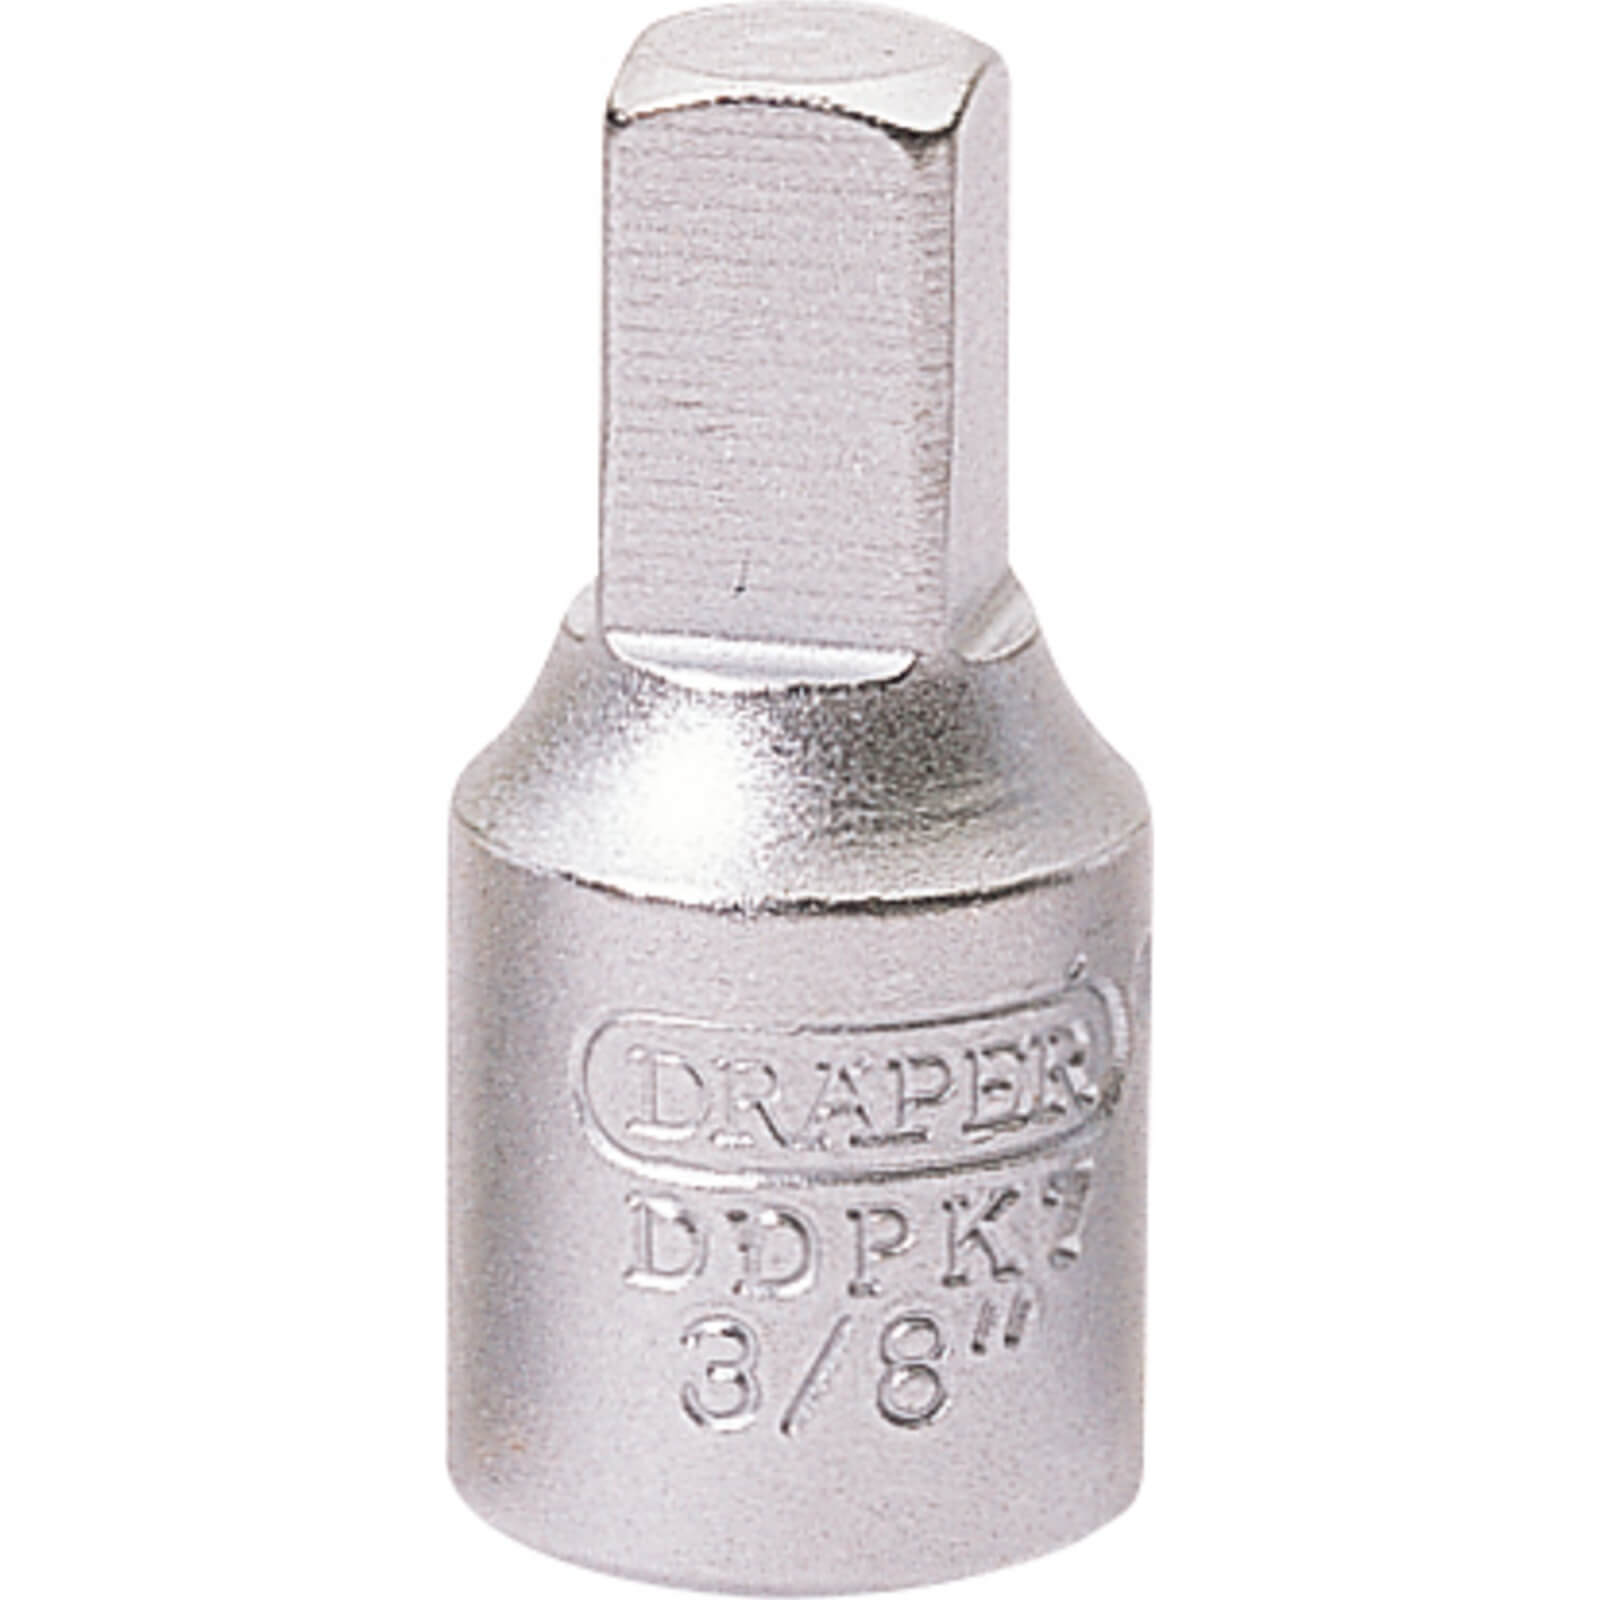 Image of Draper Imperial Drain Plug Key 3/8" 3/8"